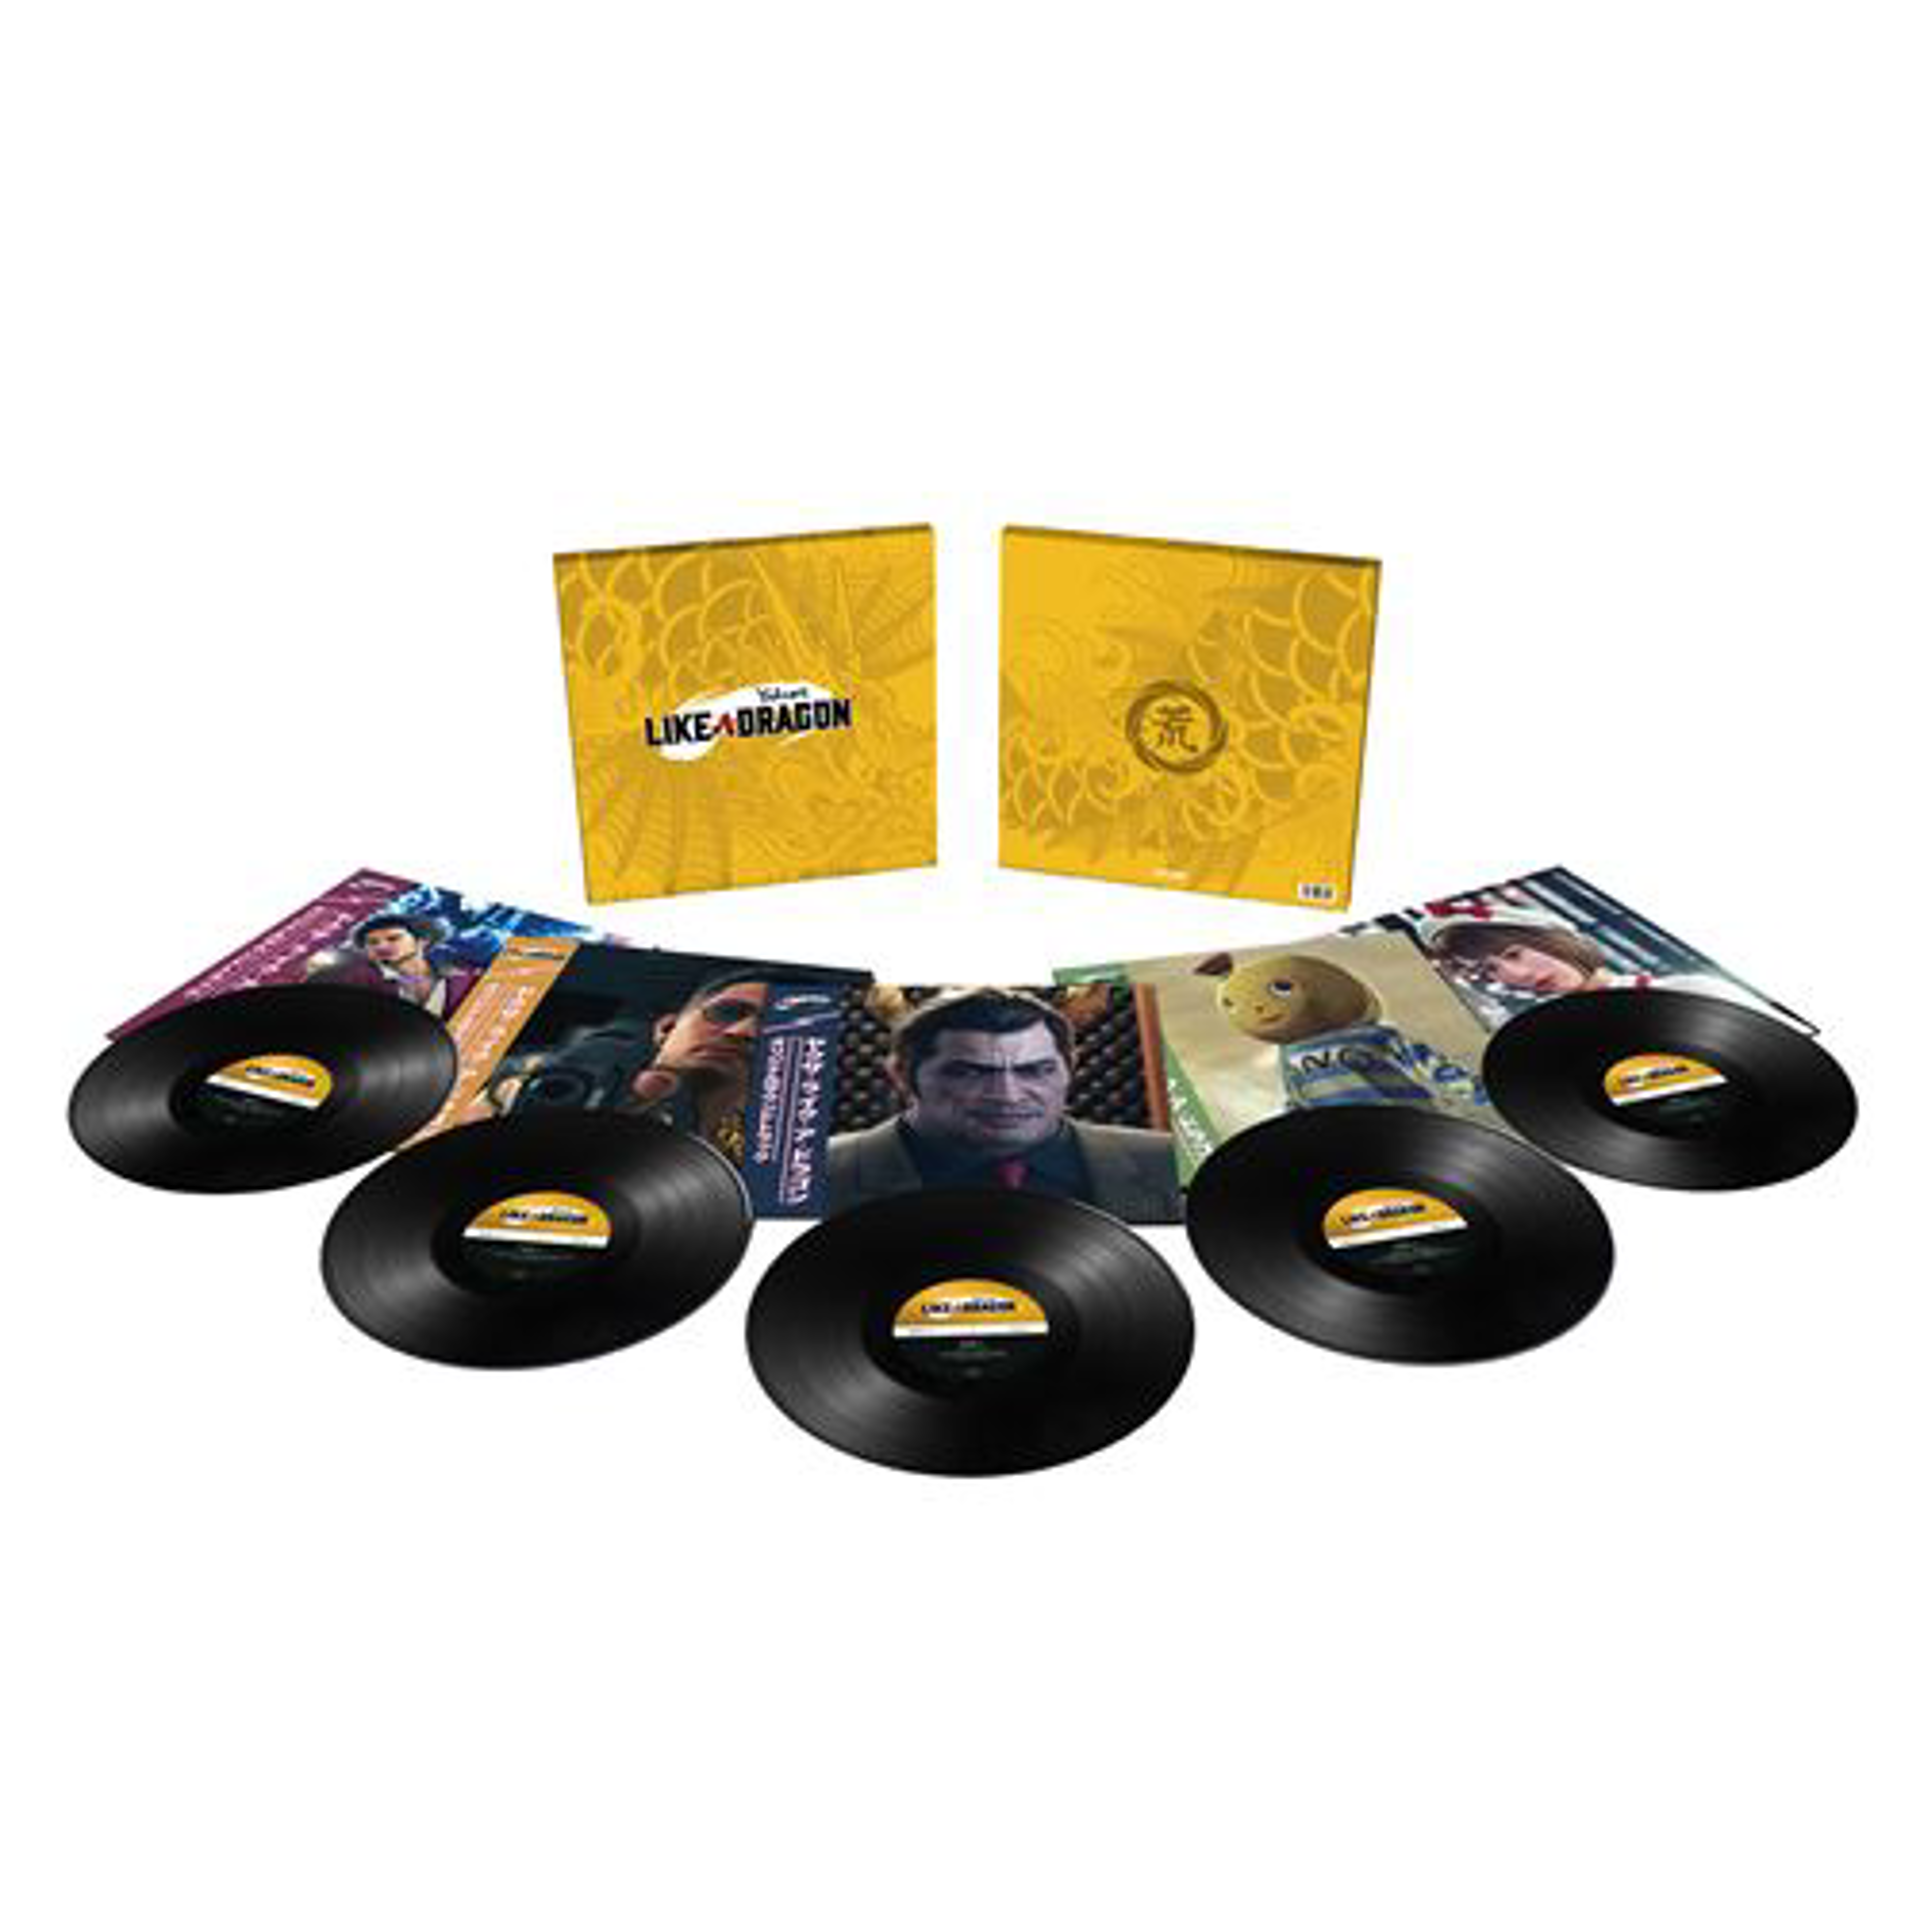 Yakuza: Like a Dragon (Deluxe Boxset) - Original Soundtrack - 5-LP Black Vinyl